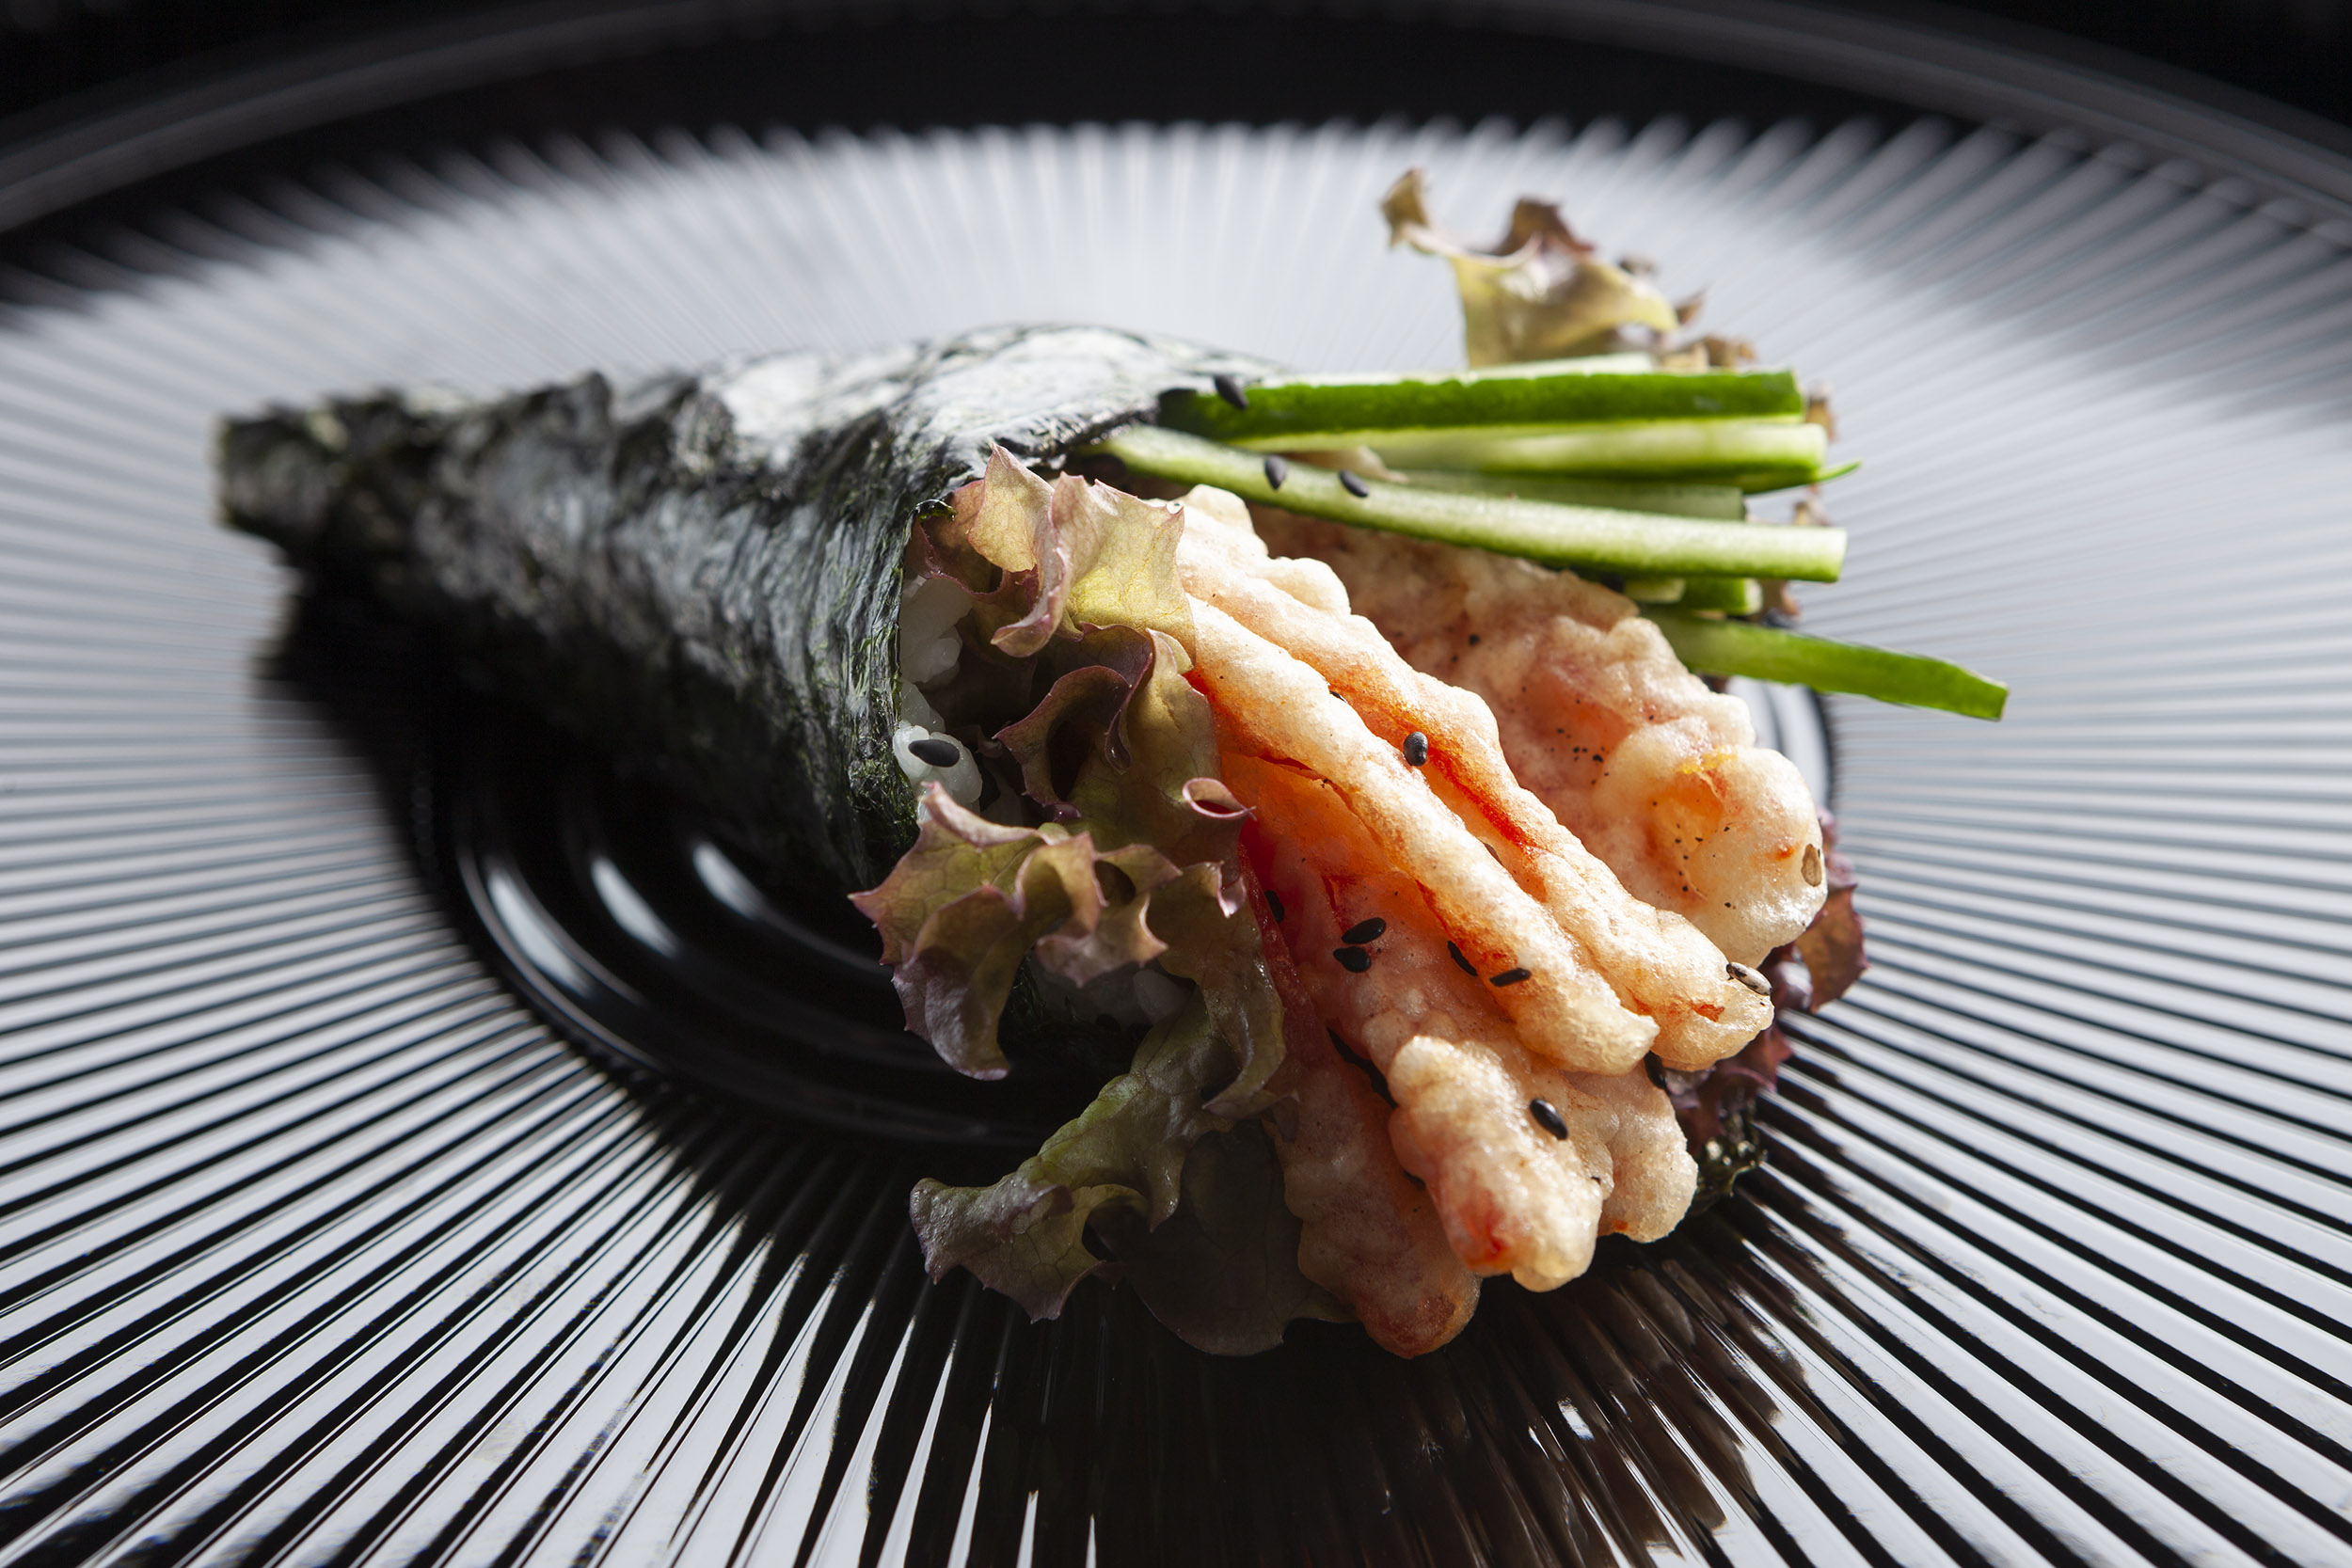 Sushi presented on a shiny black plate. Paul Scott, food.